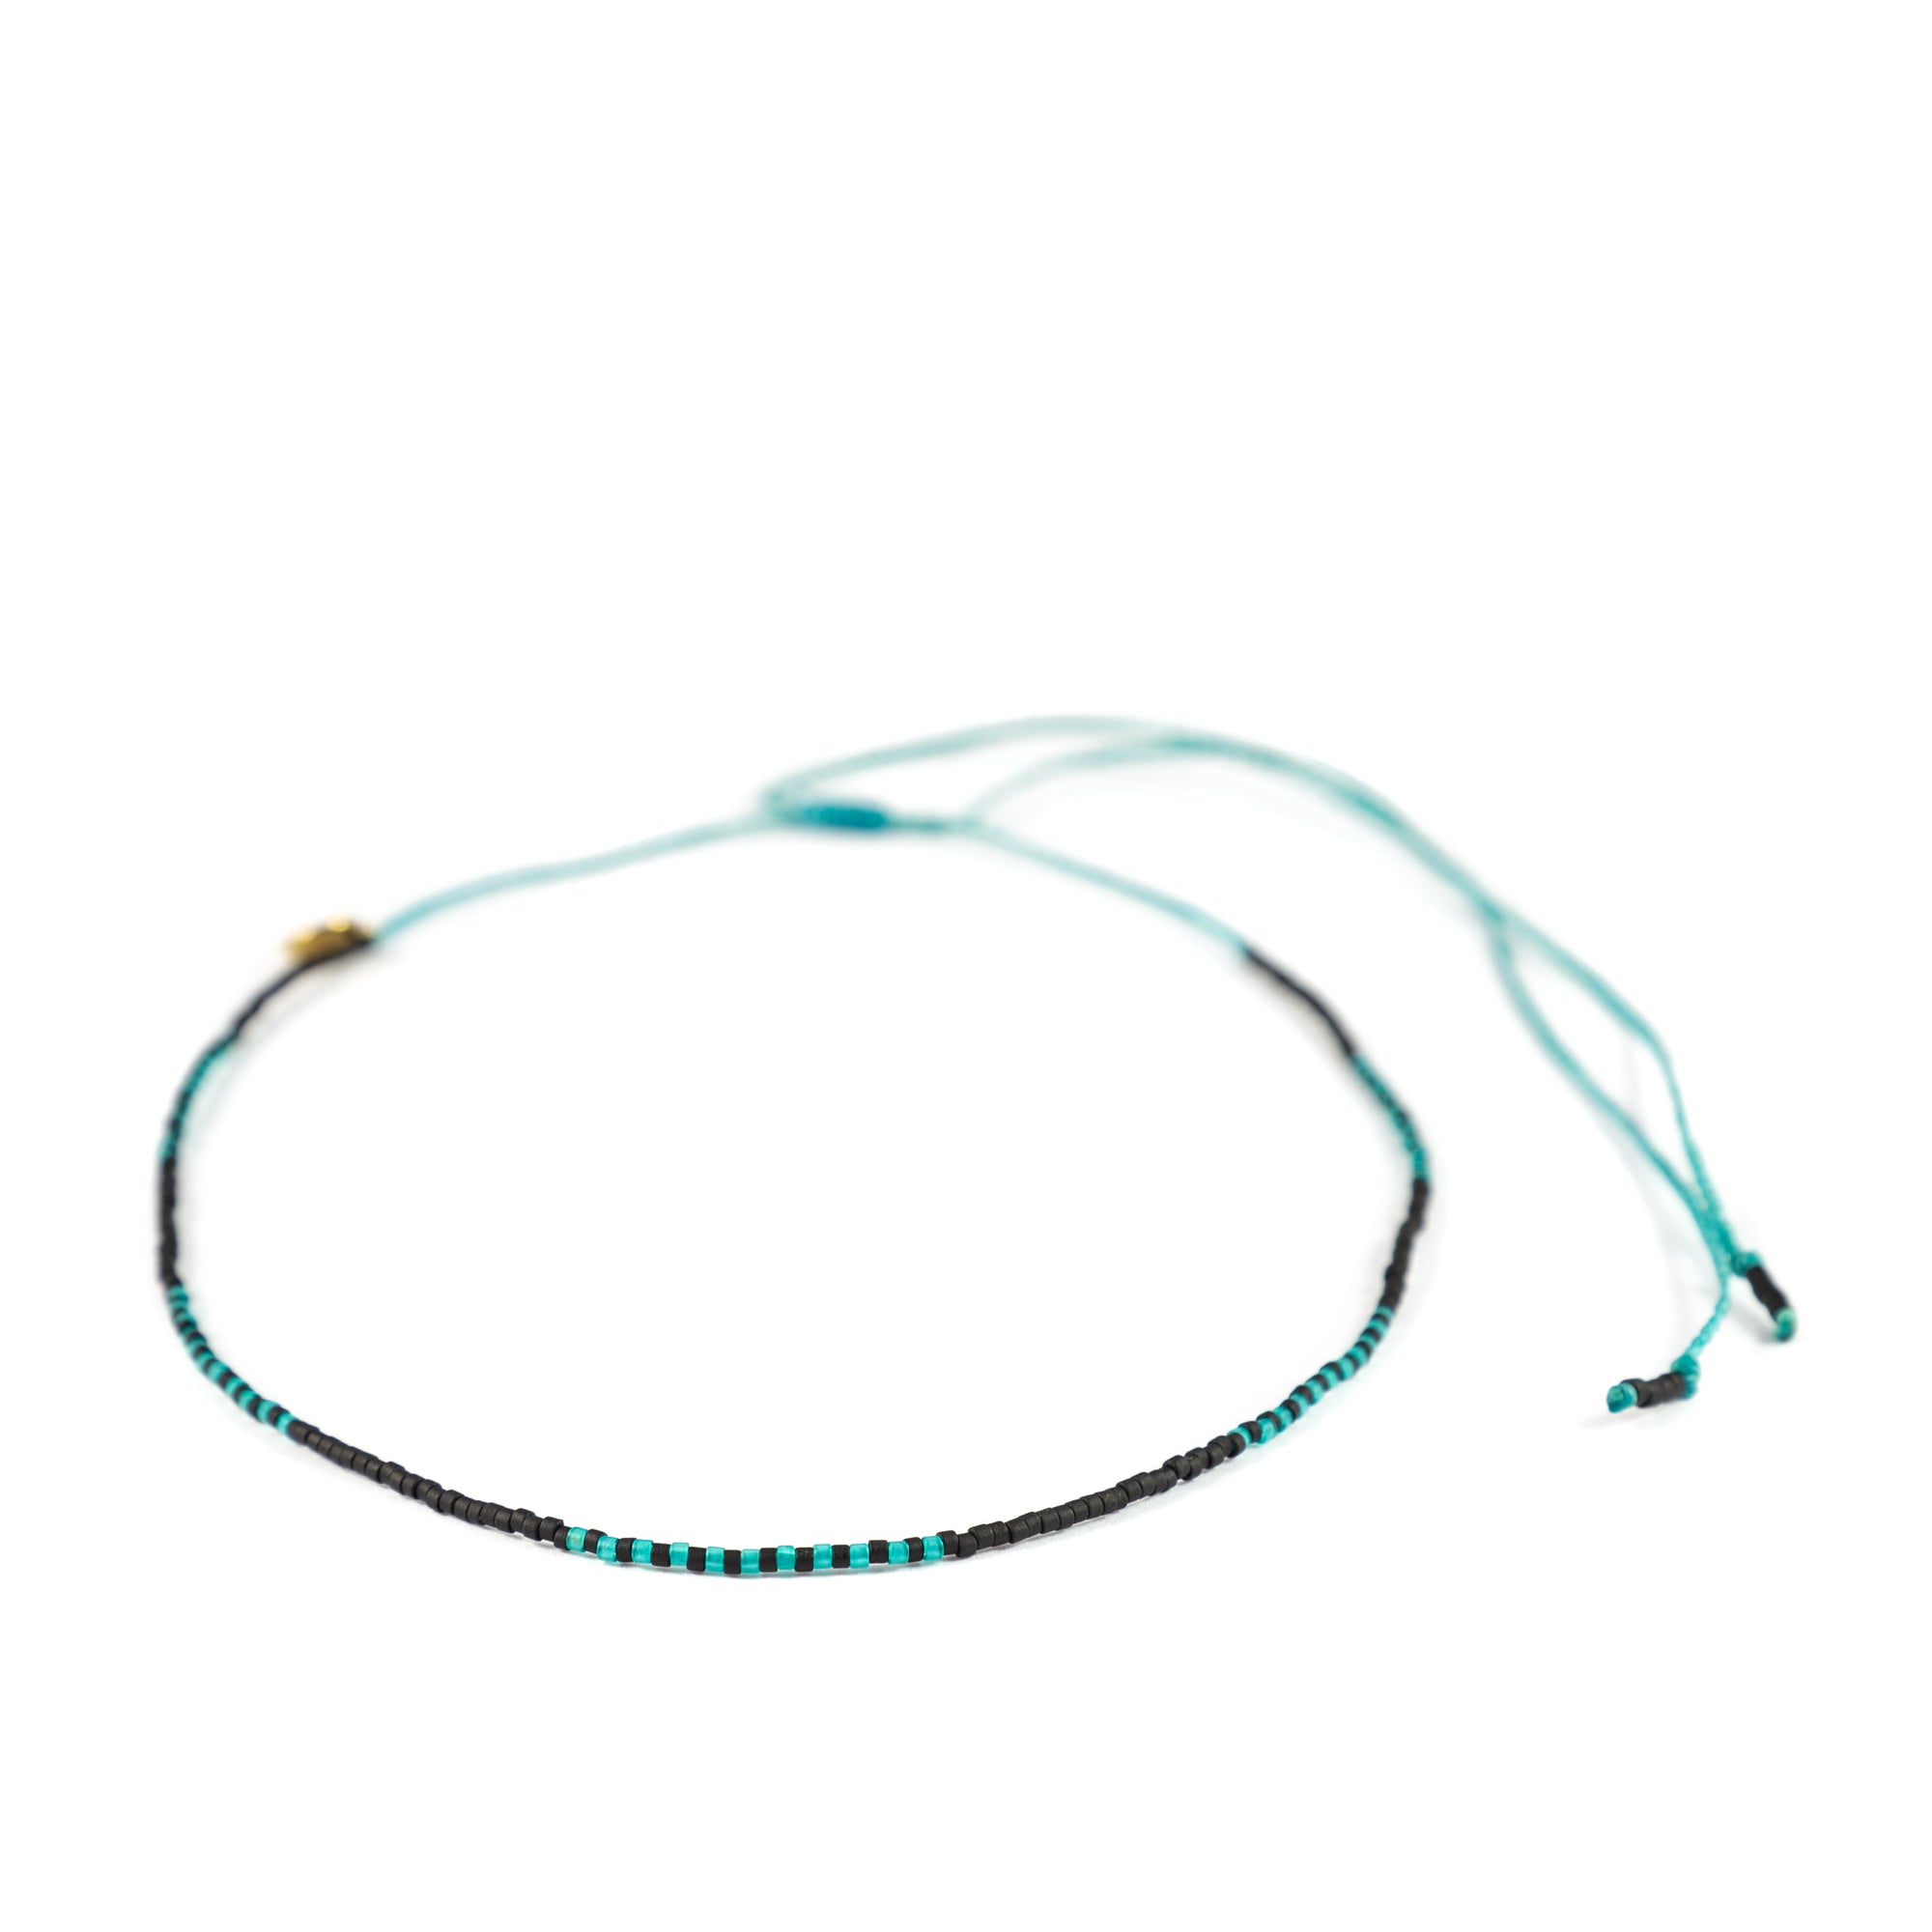 Black & Sea Glass Teal Alternating Block Mermaid Necklace